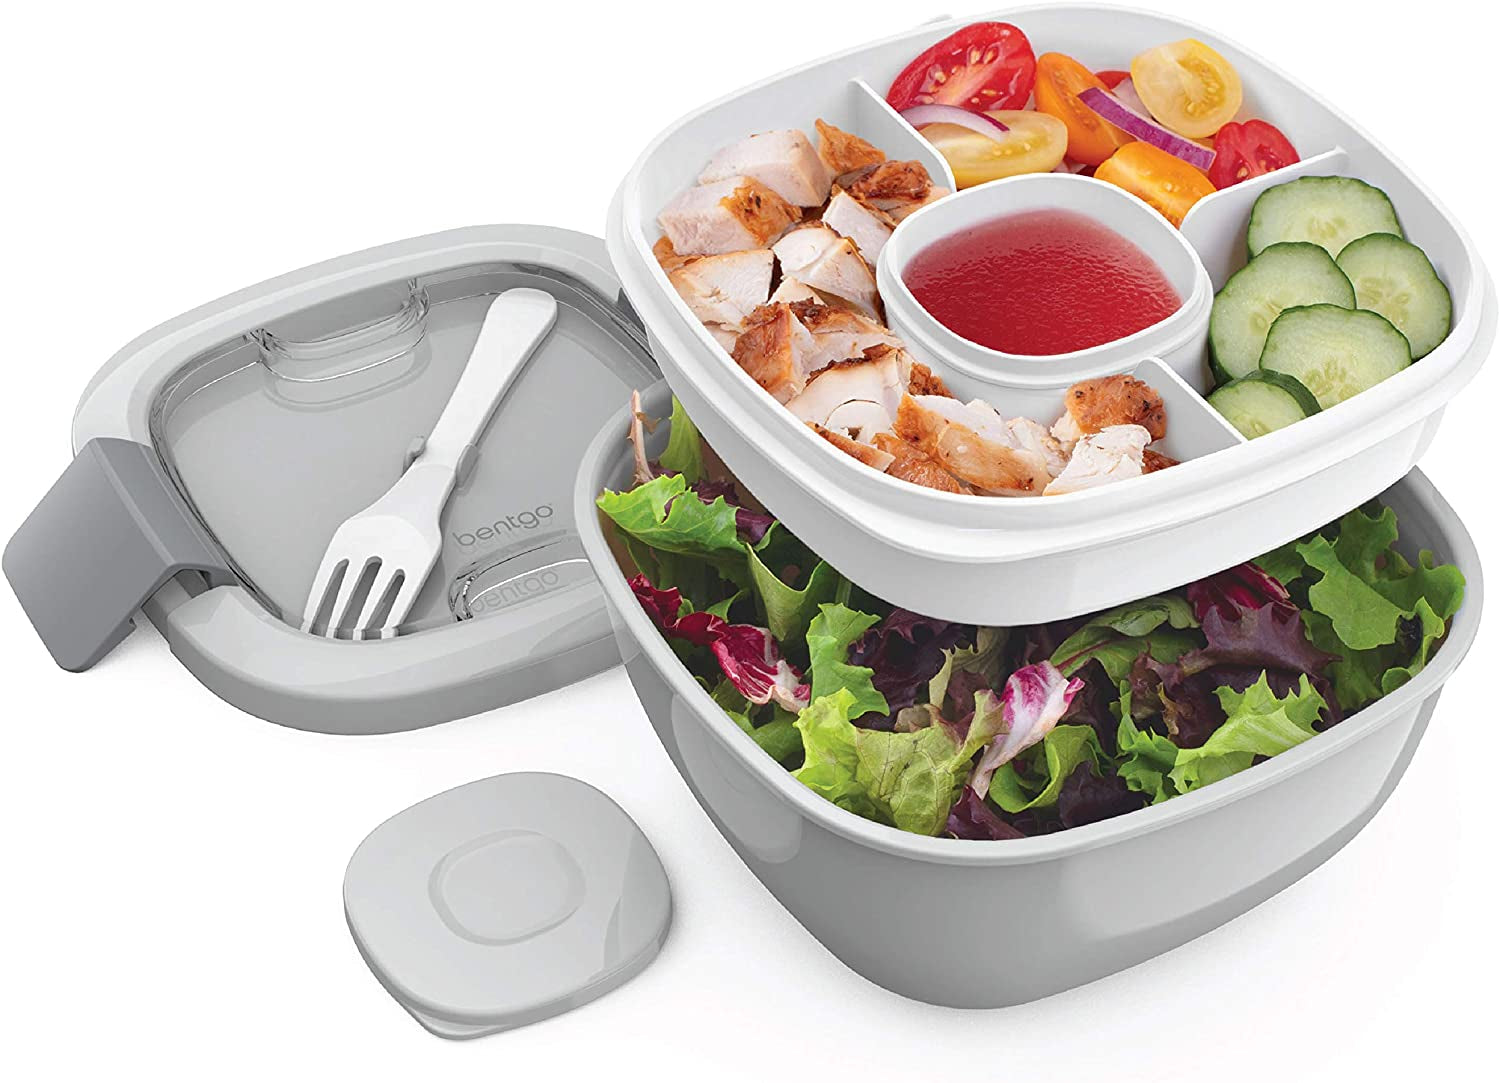 Bentgo Salad Lunch Container